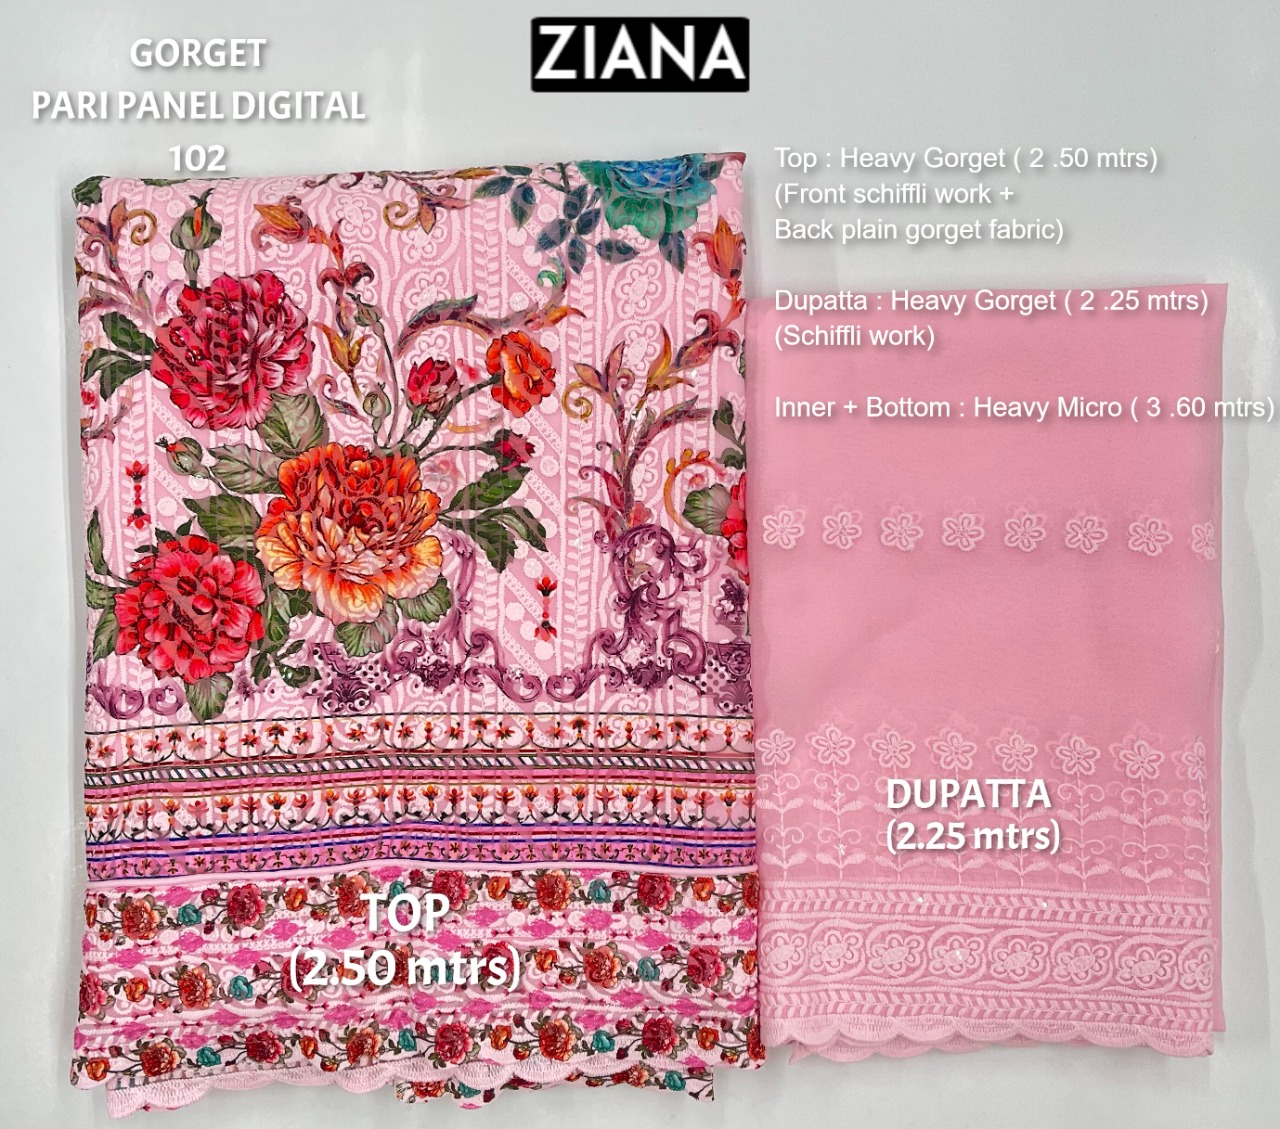 ziana gorget pari panel digital 102 gorget elegant salwar suit colour set